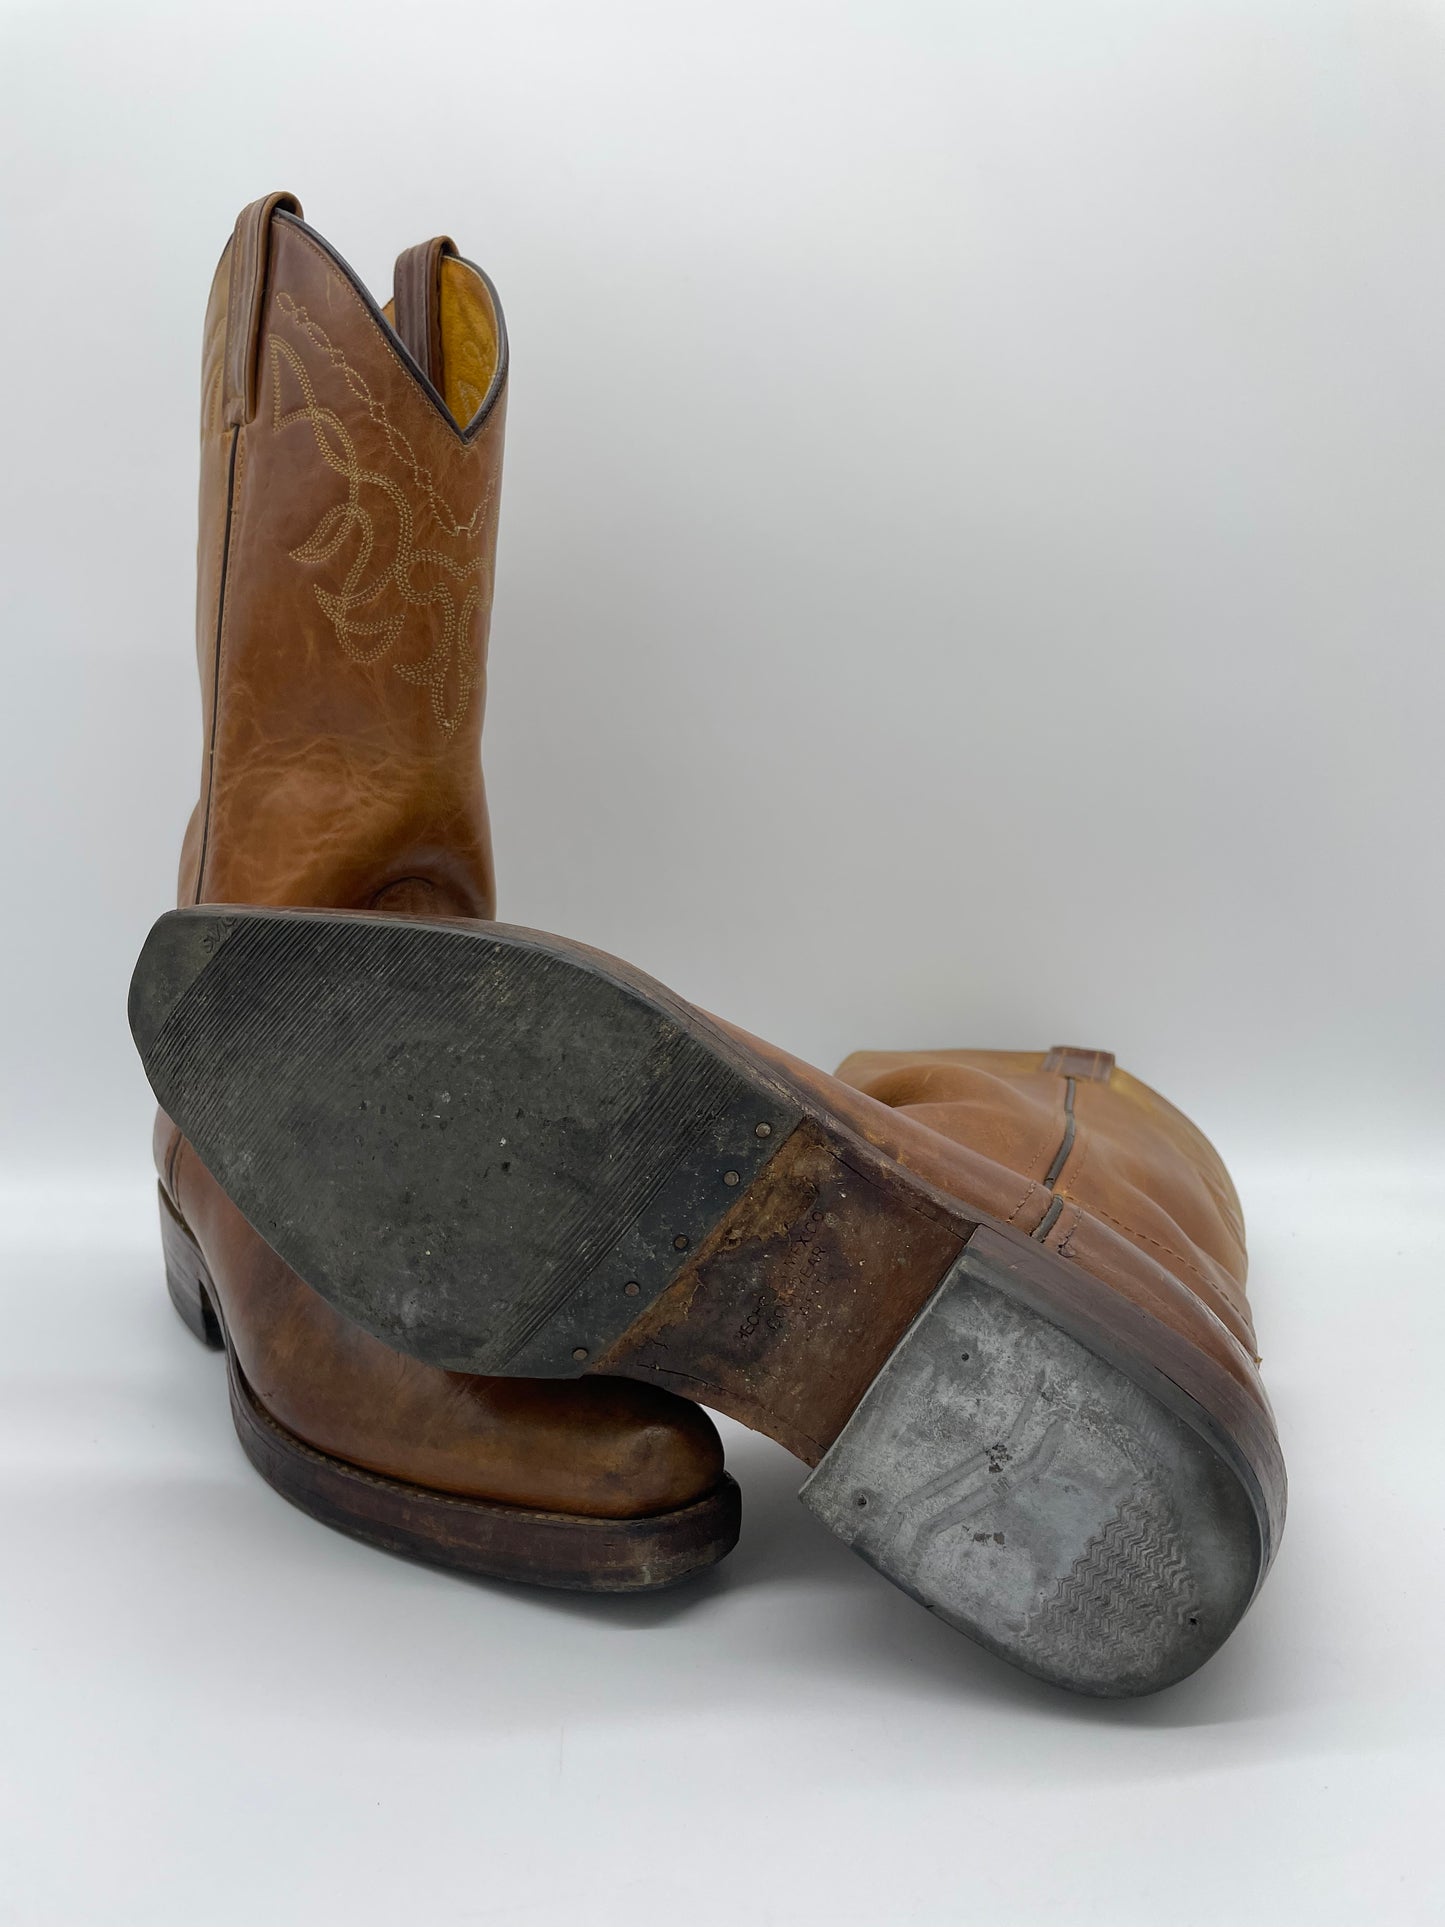 Marlboro boots